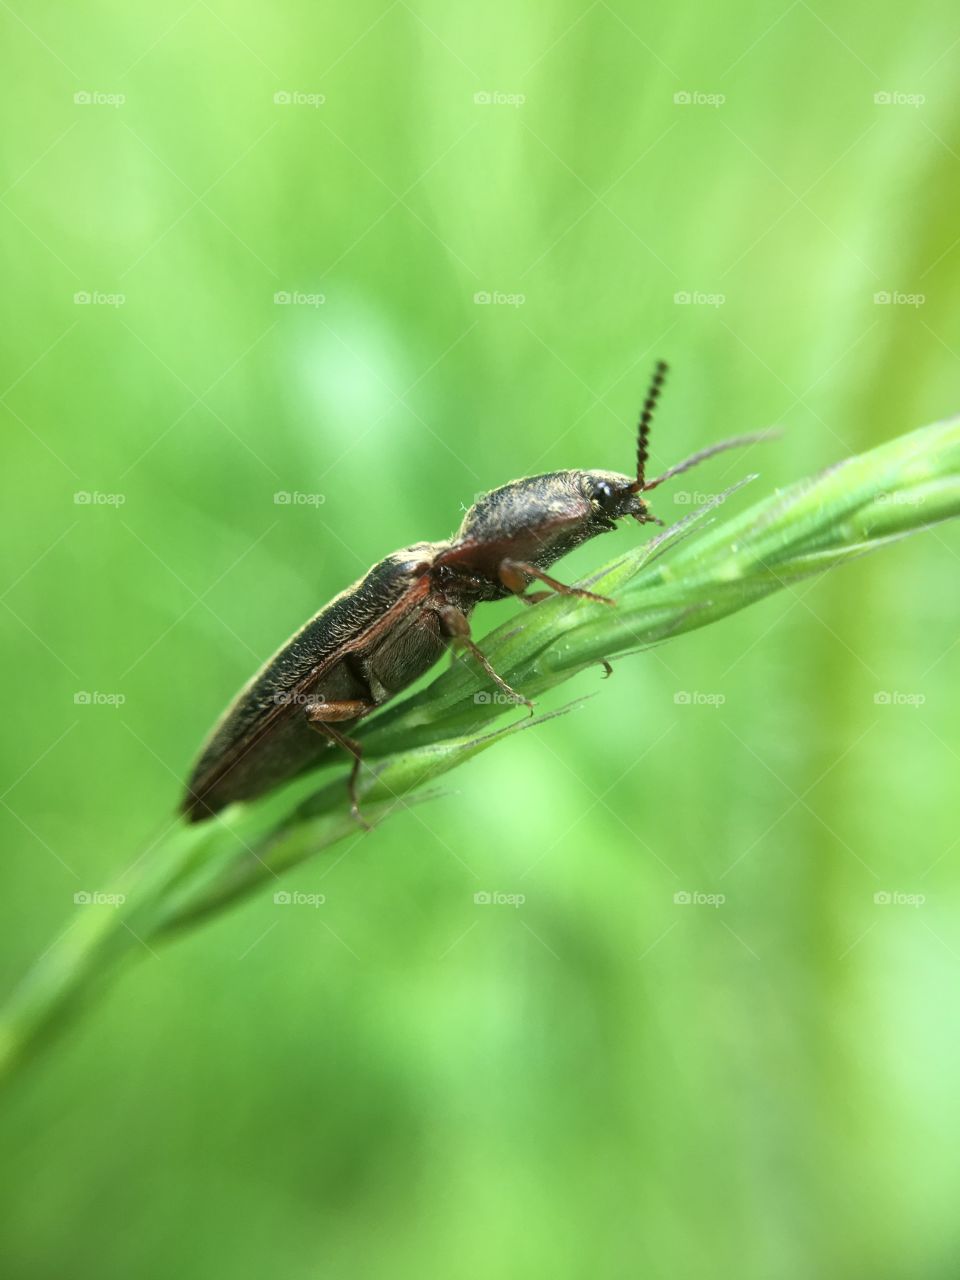 Bug on blade of grass